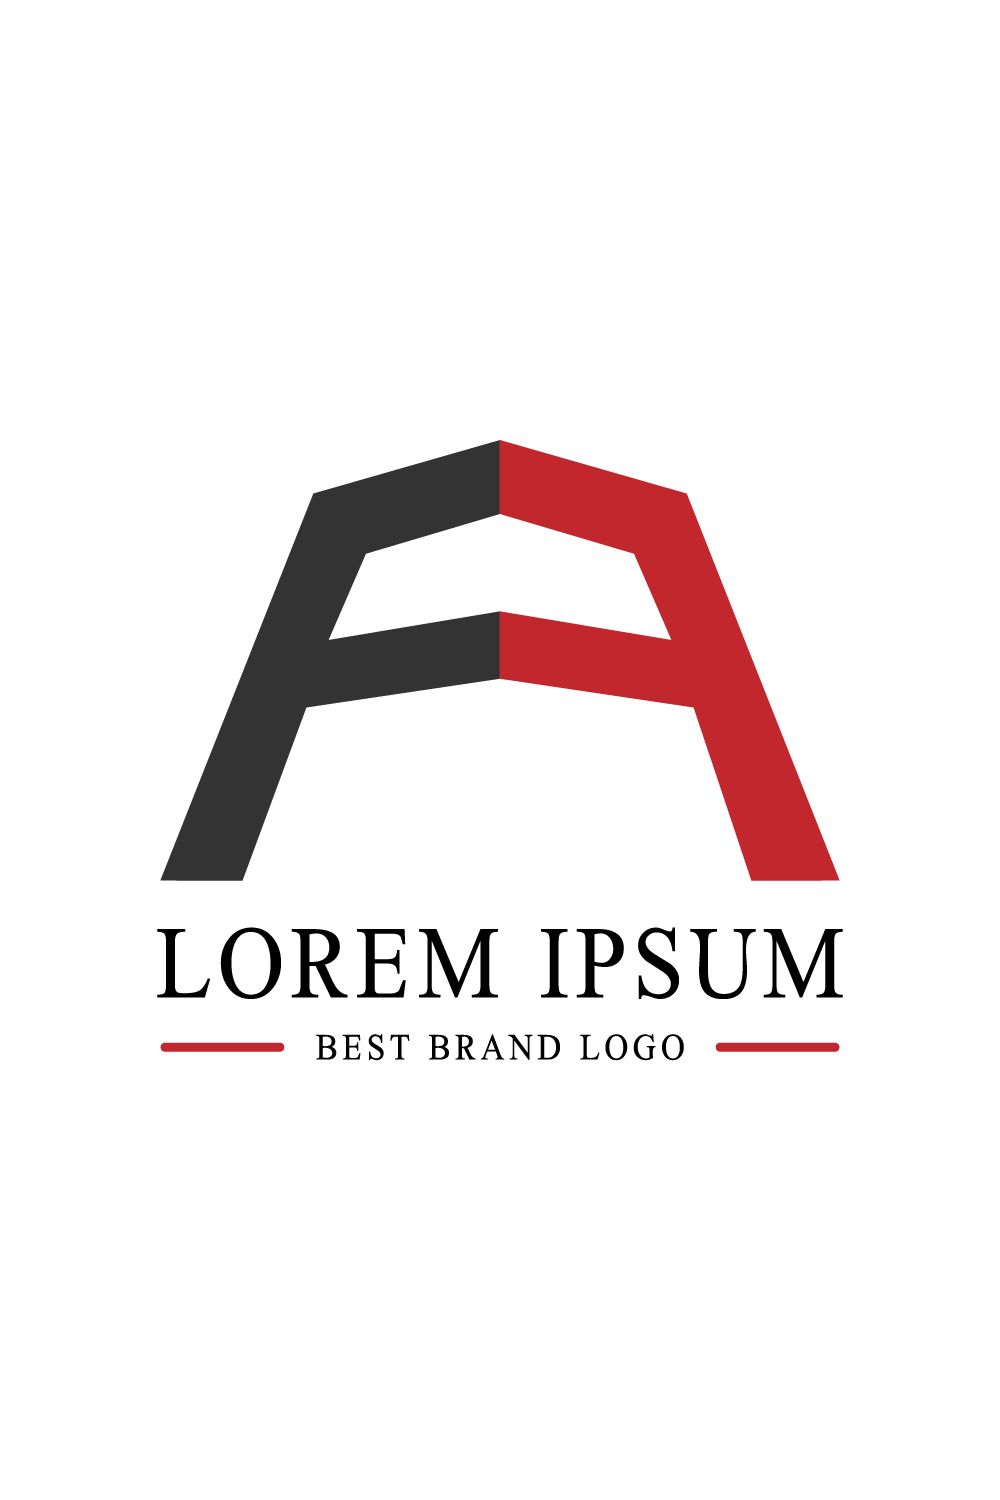 A letters logo design vector icon FF logo monogram icon design A logo design red and black pinterest preview image.